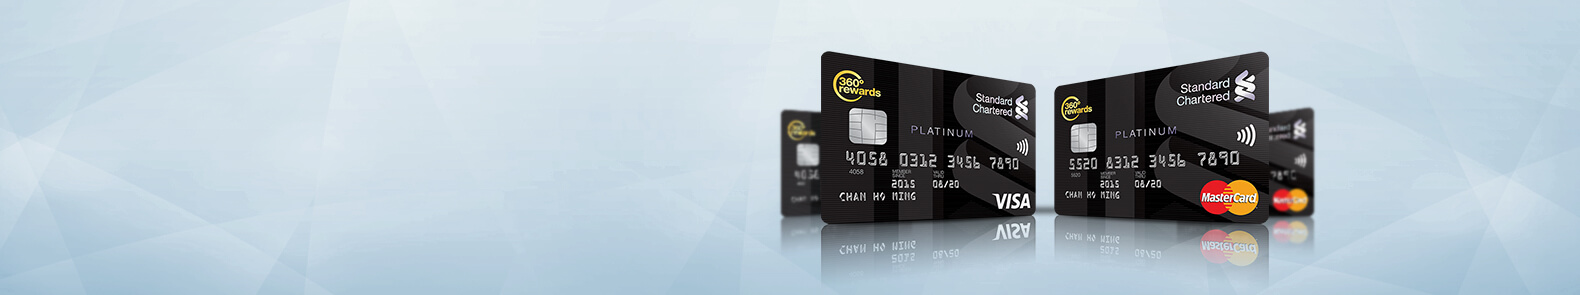 standard chartered platinum Visa Card and Mastercard with 360 rewards